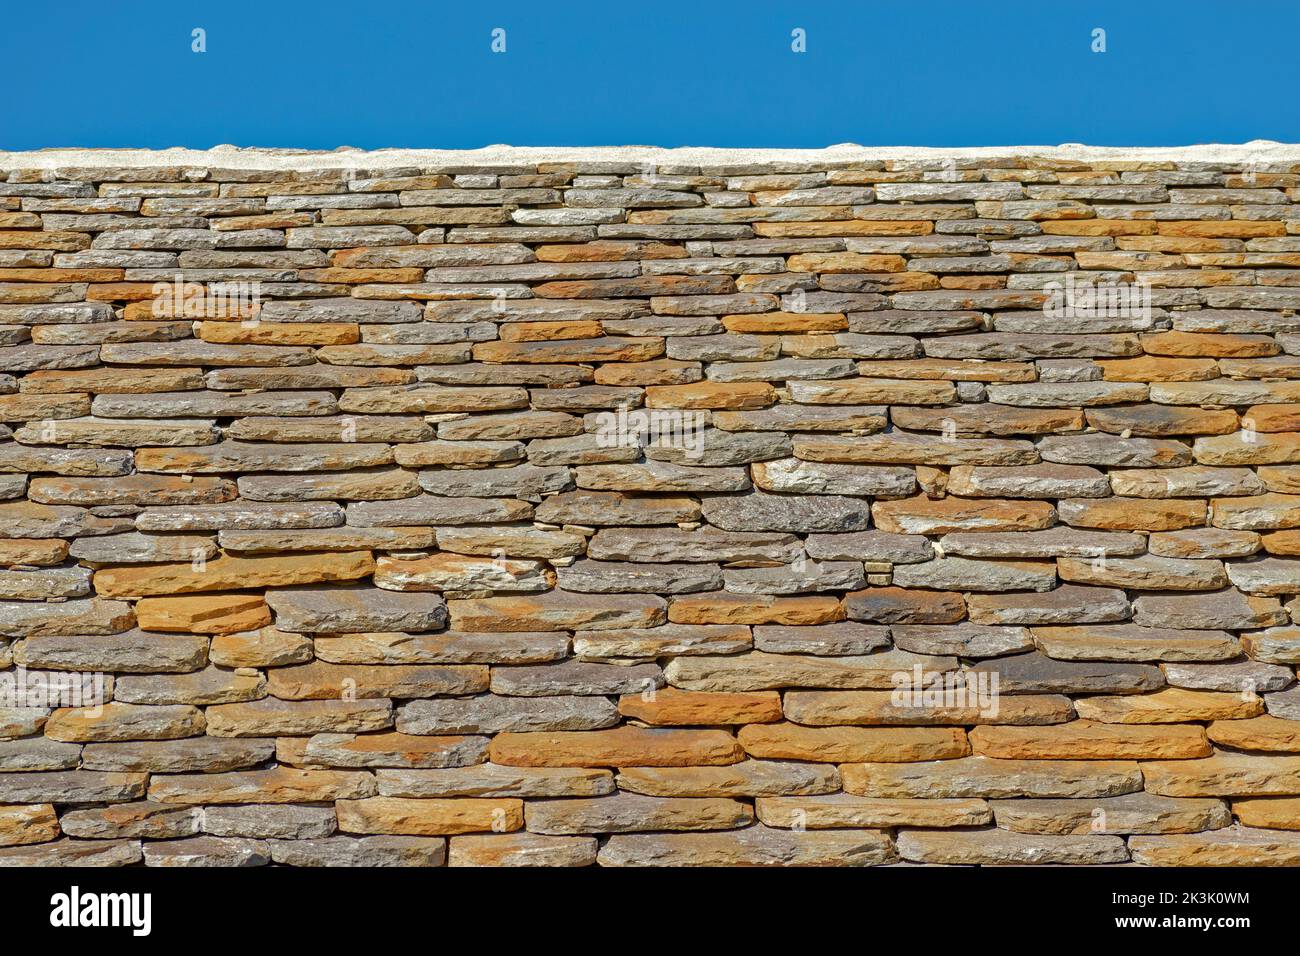 Flat stone roof tiles. Stock Photo